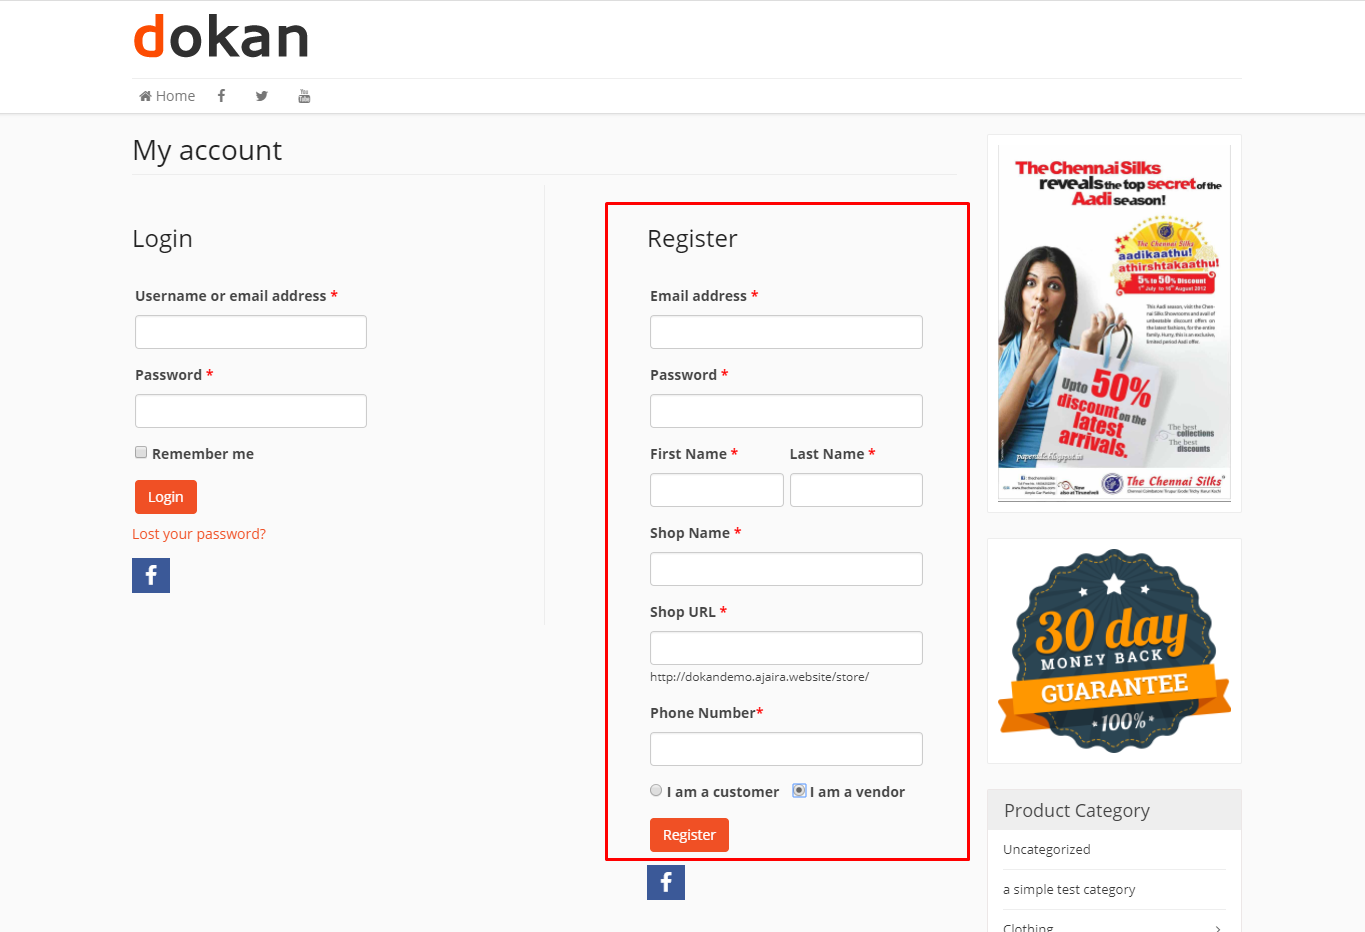 This is a screenshot of the Dokan vendor registration form 